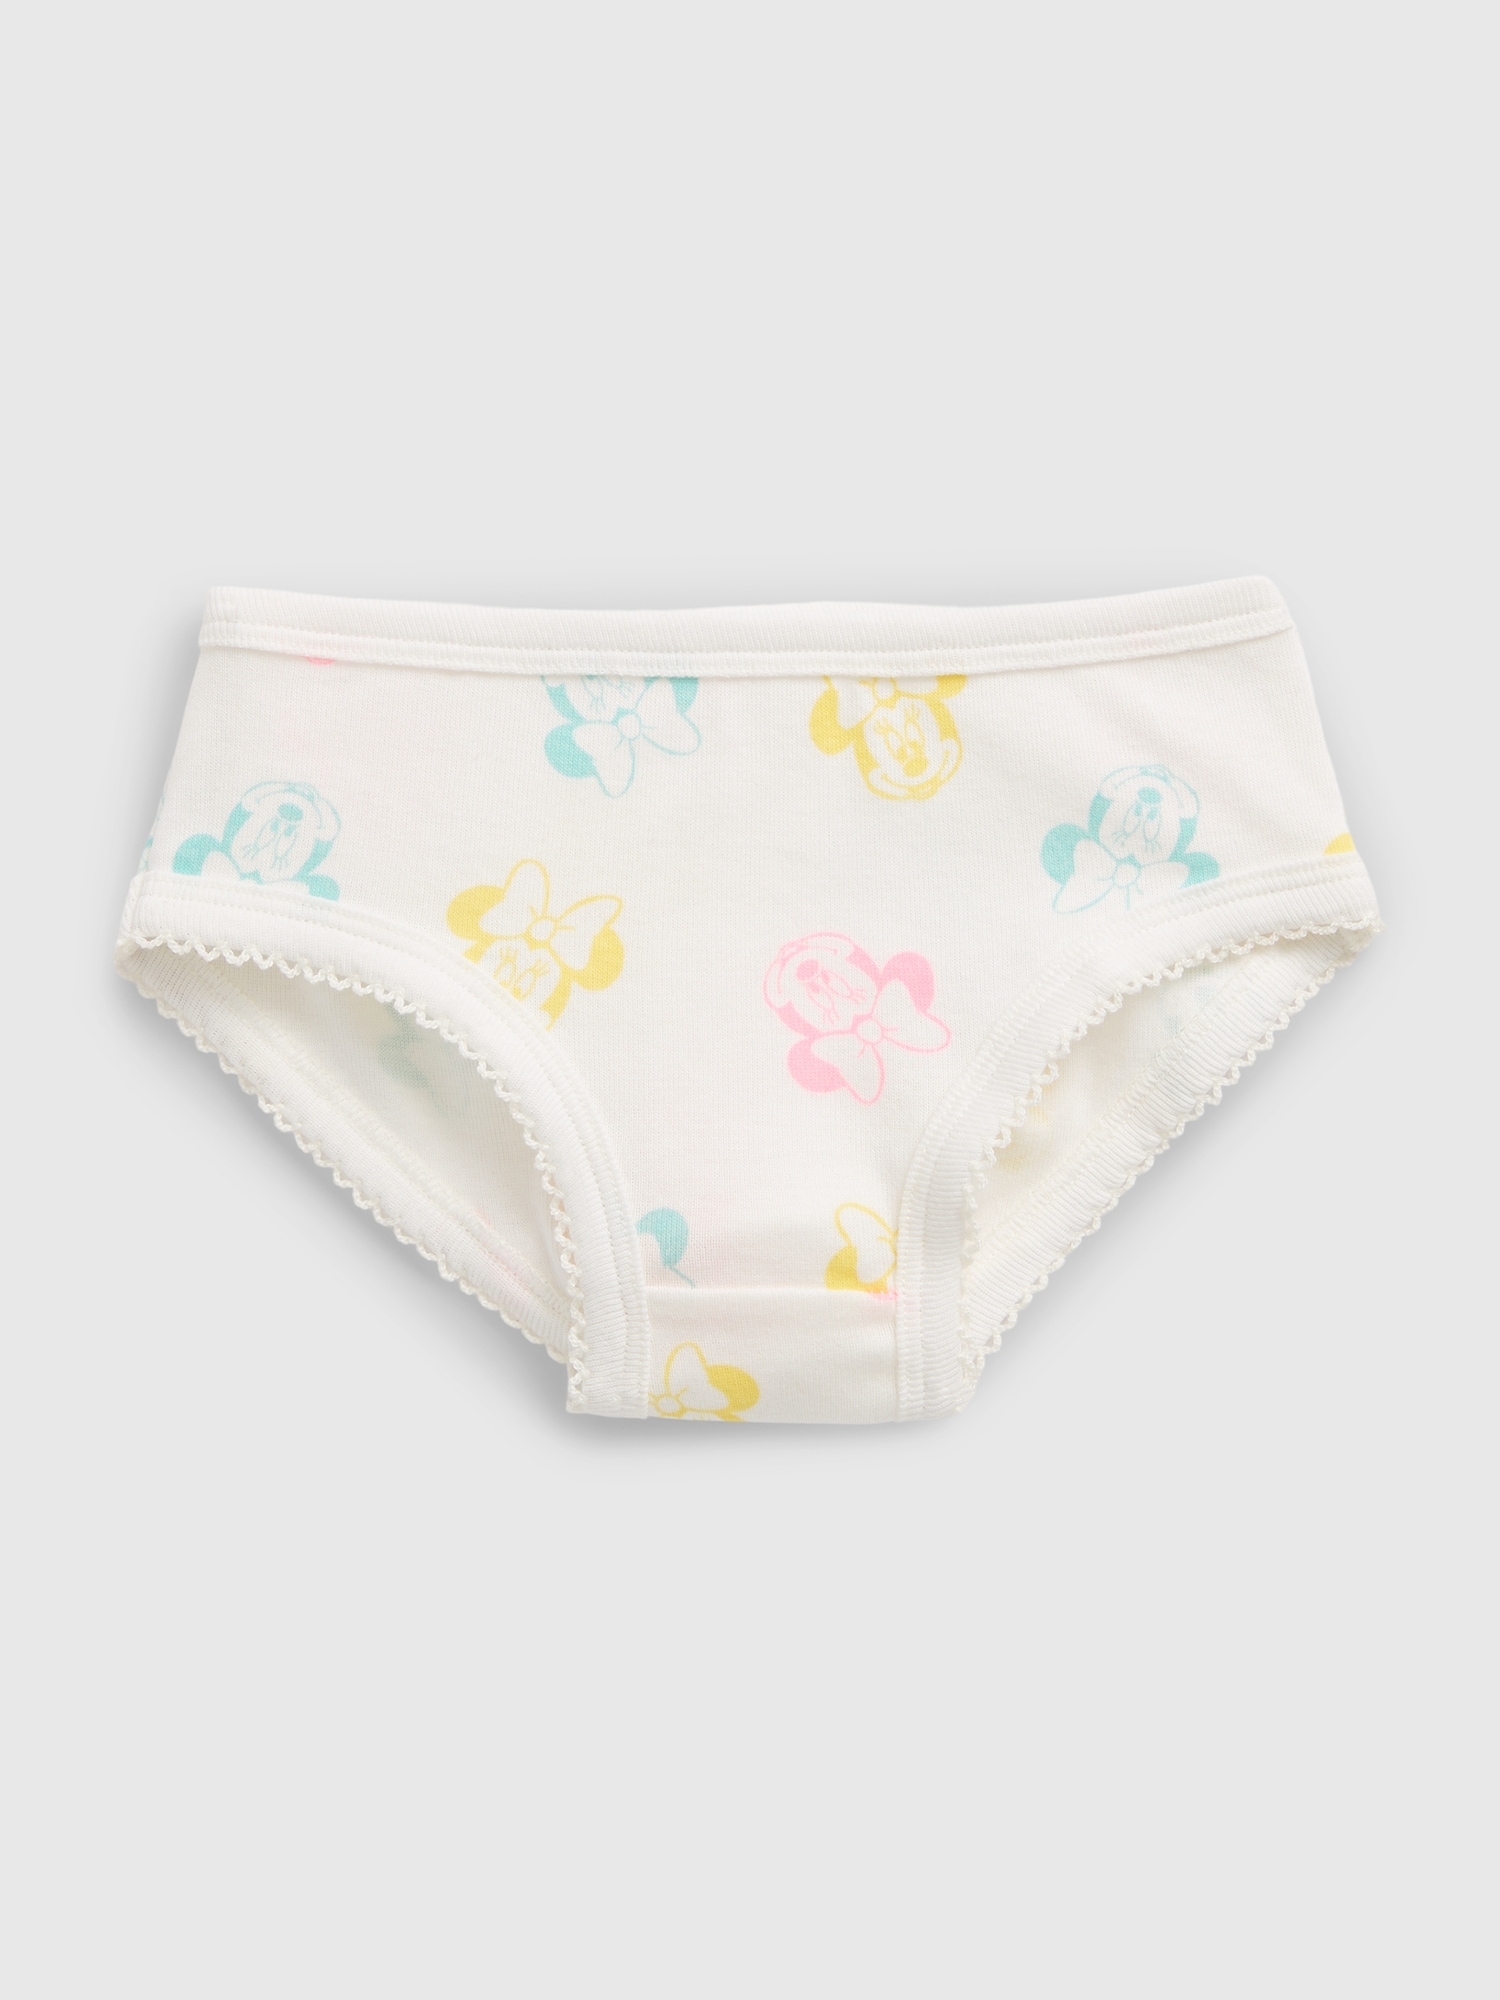 New Gap Girls 5 Pack Panties Bikinis Underwear 6 7 8 10 12 yr Bunny Rabbit  Flora